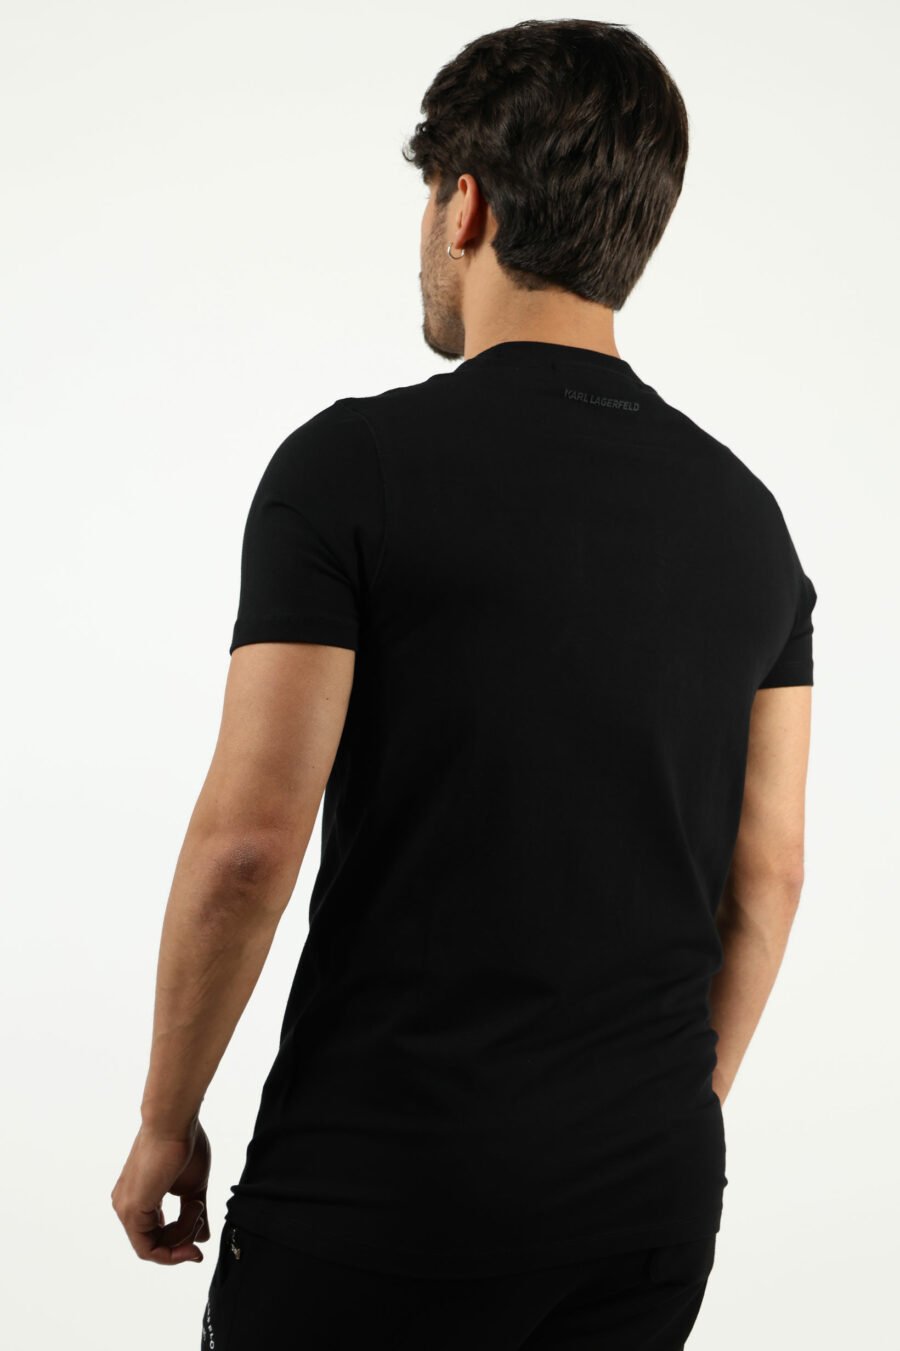 Camiseta negra con maxilogo firma delineado "rue st guillaume" - number13943